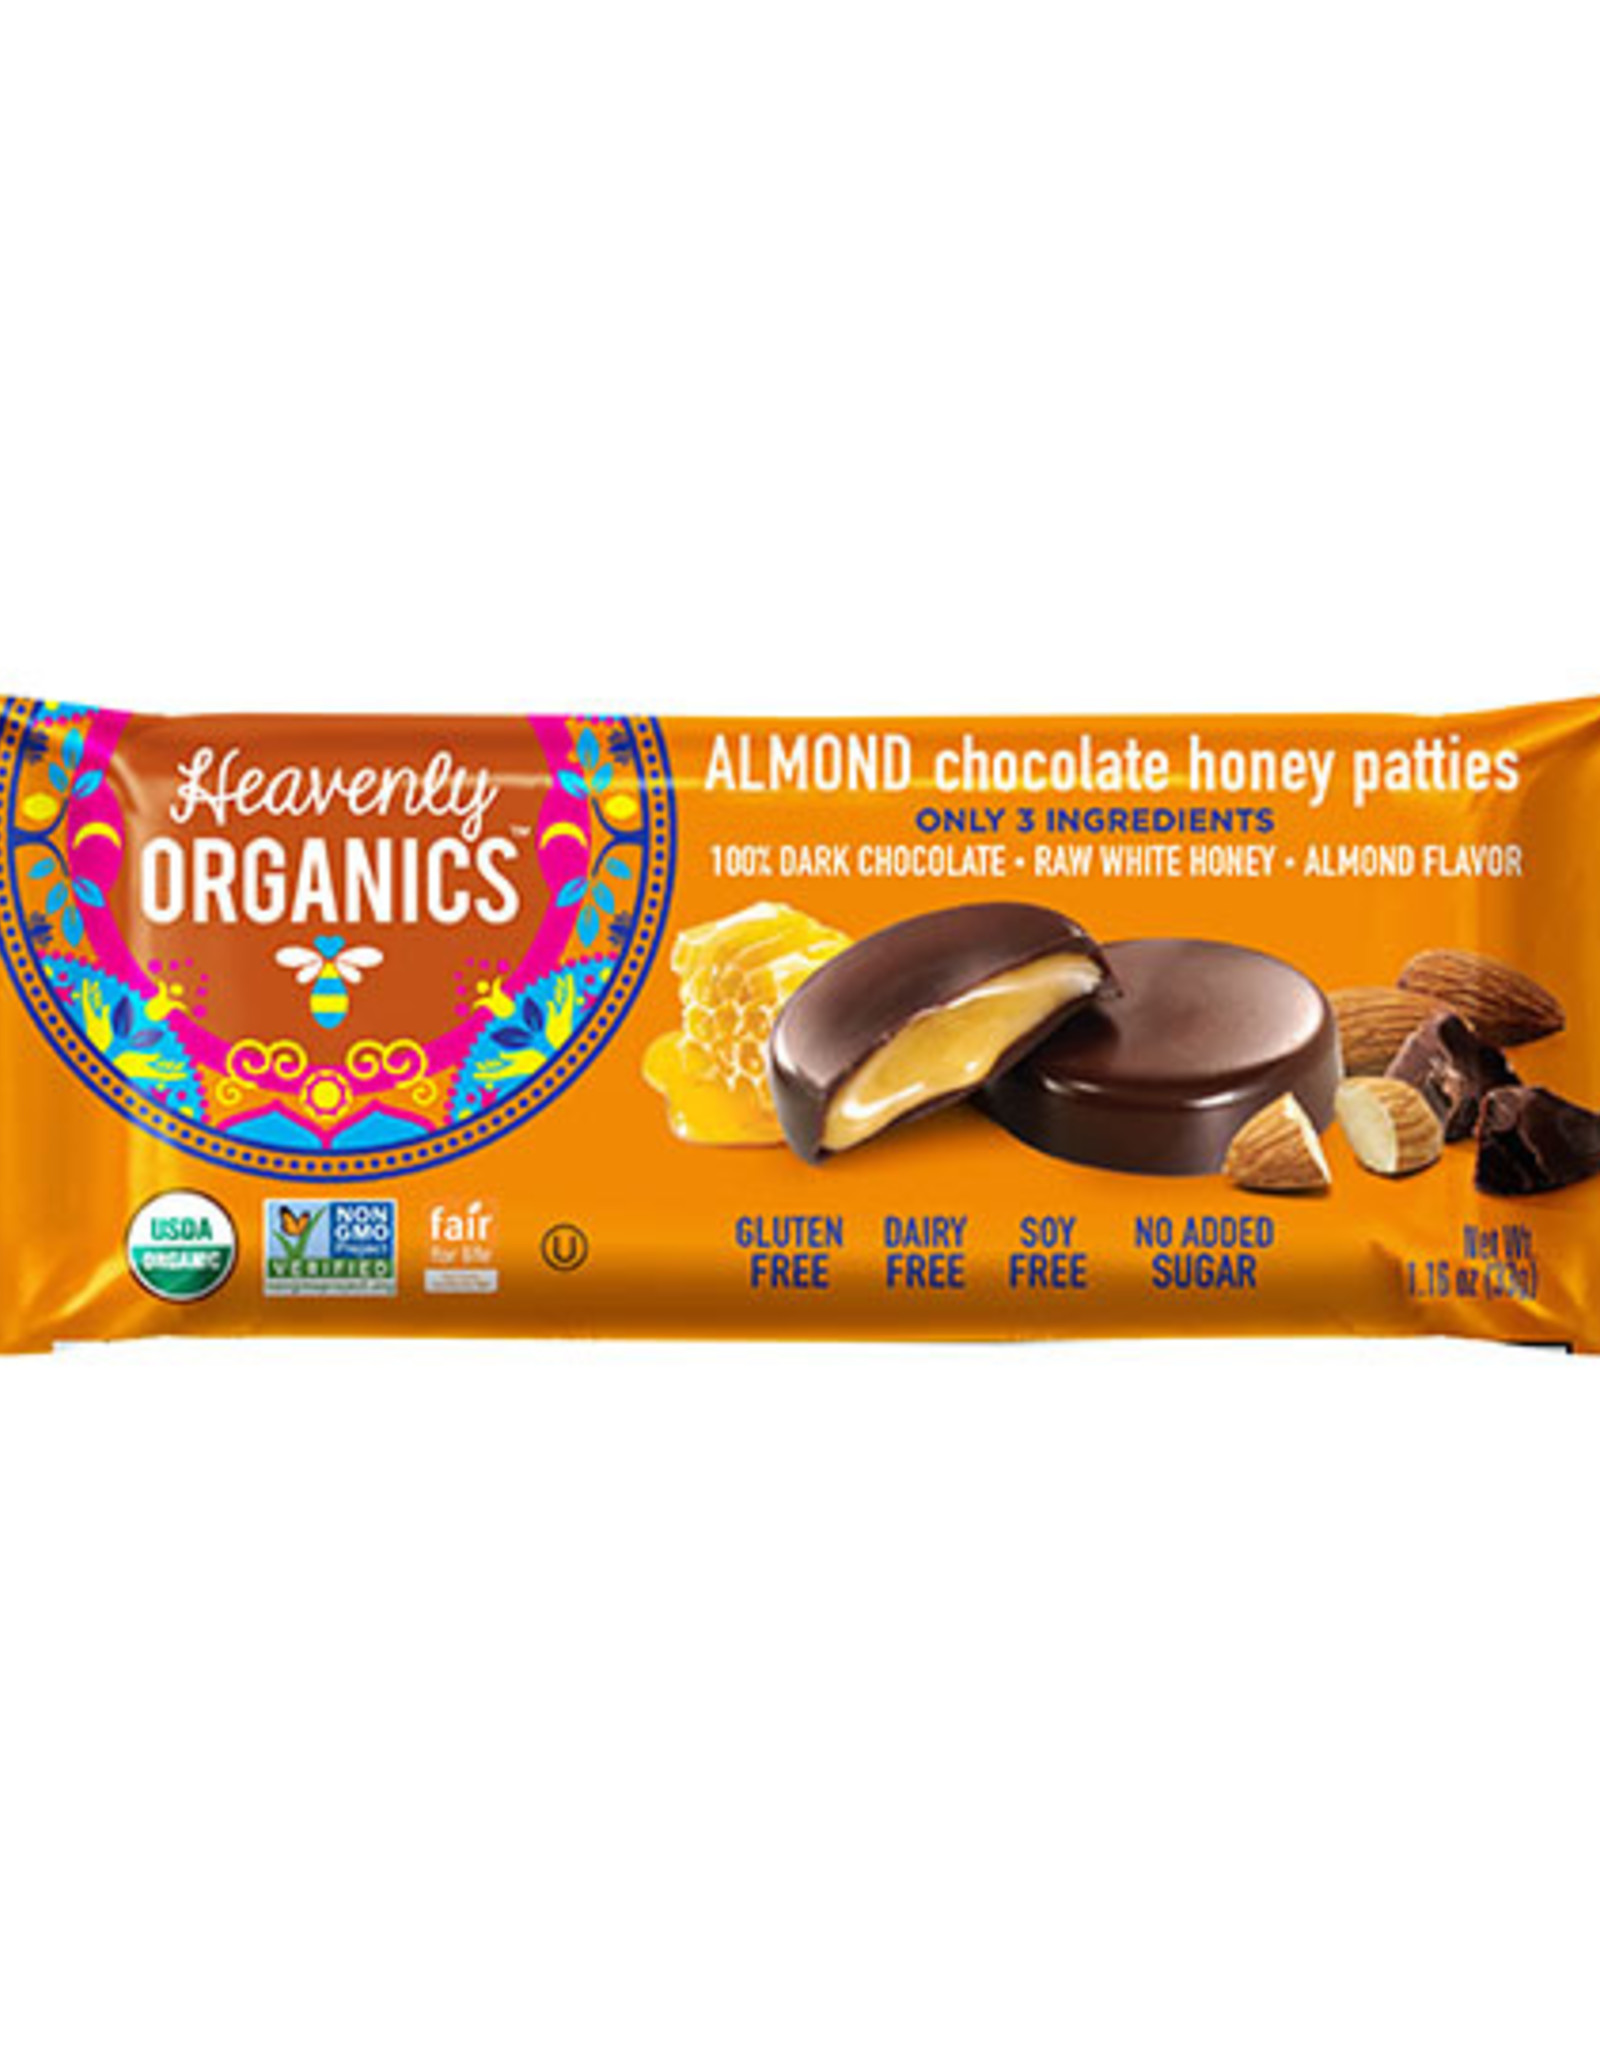 Heavenly Organics Chocolate Honey Patties Almond - single